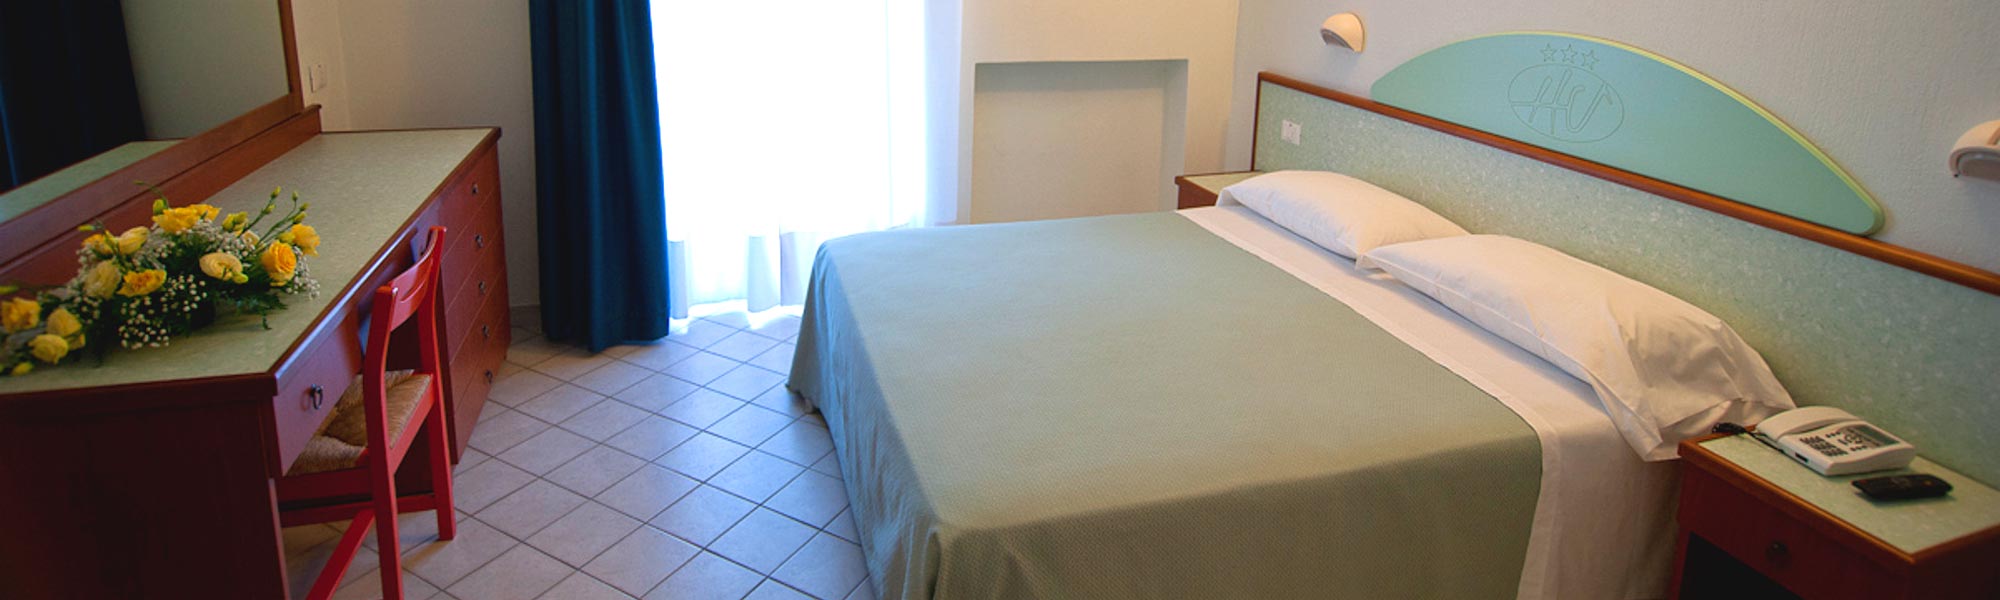 Zimmer Hotel Soverato, Kalabrien, Italien